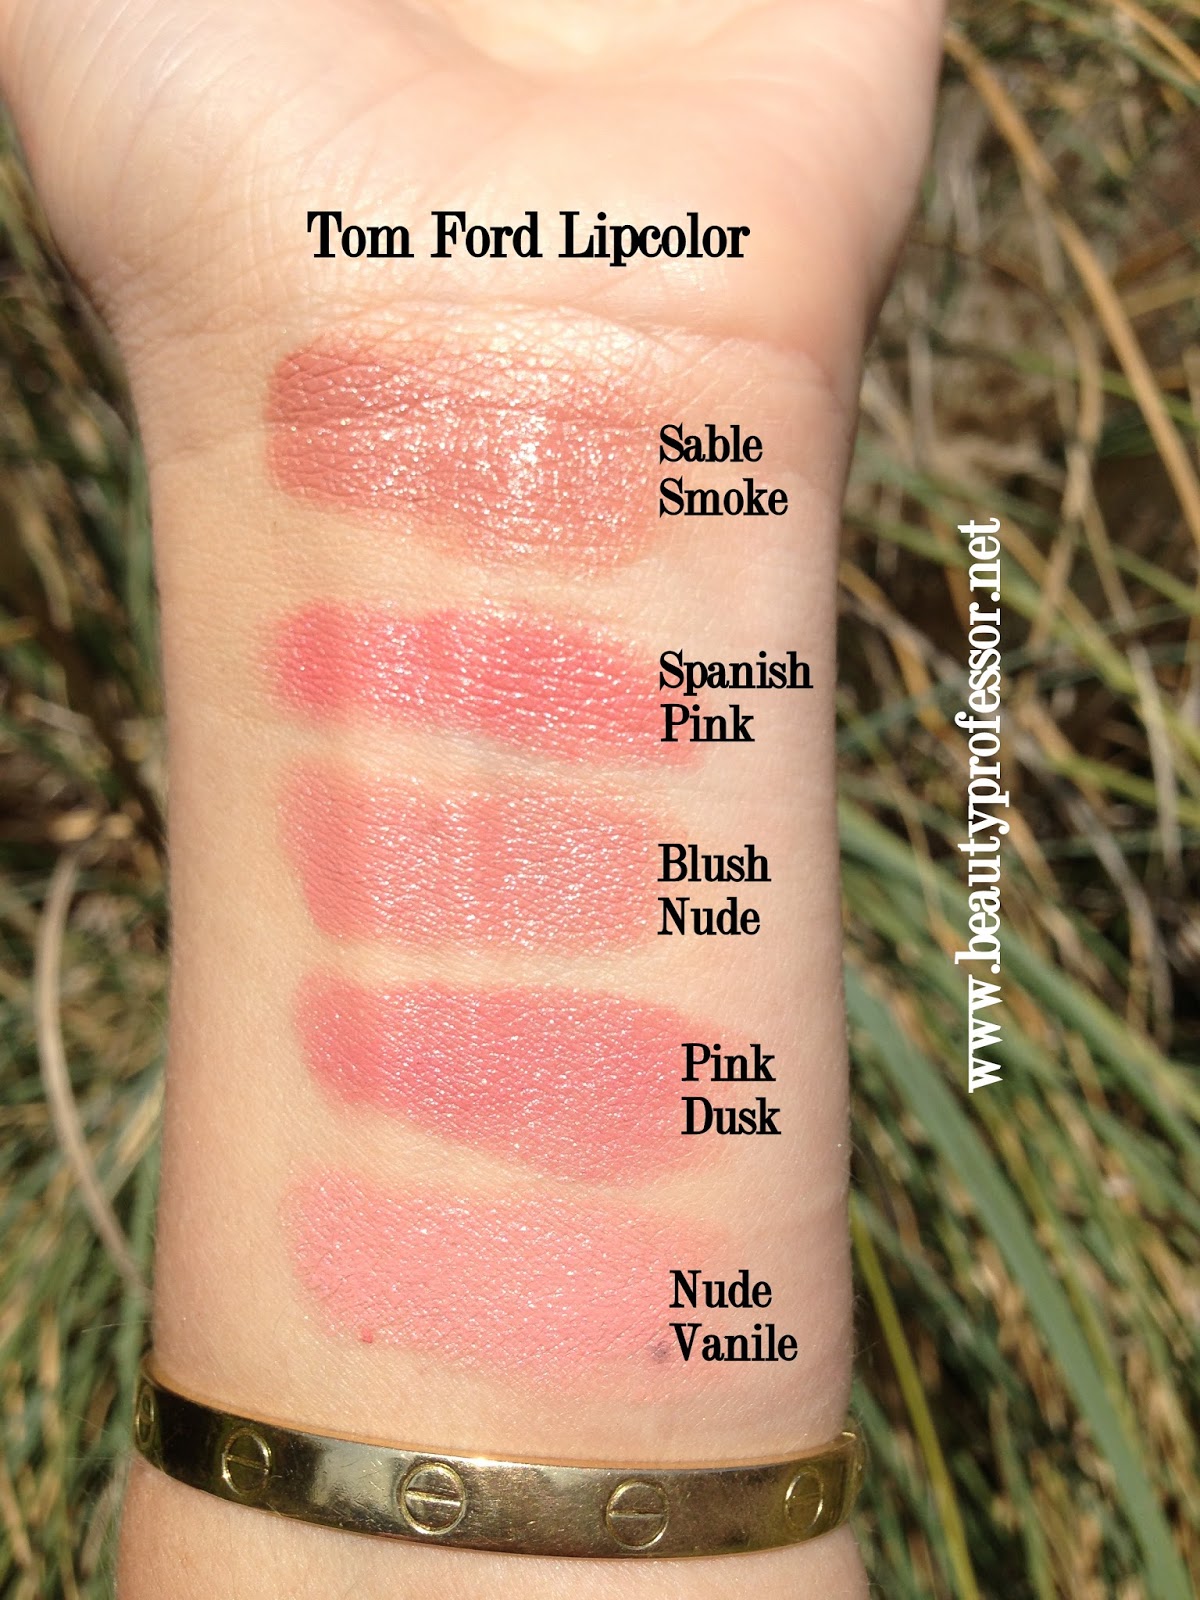 Pale Tom Ford Lipsticks...a Love Story | Beauty Professor | Bloglovin'